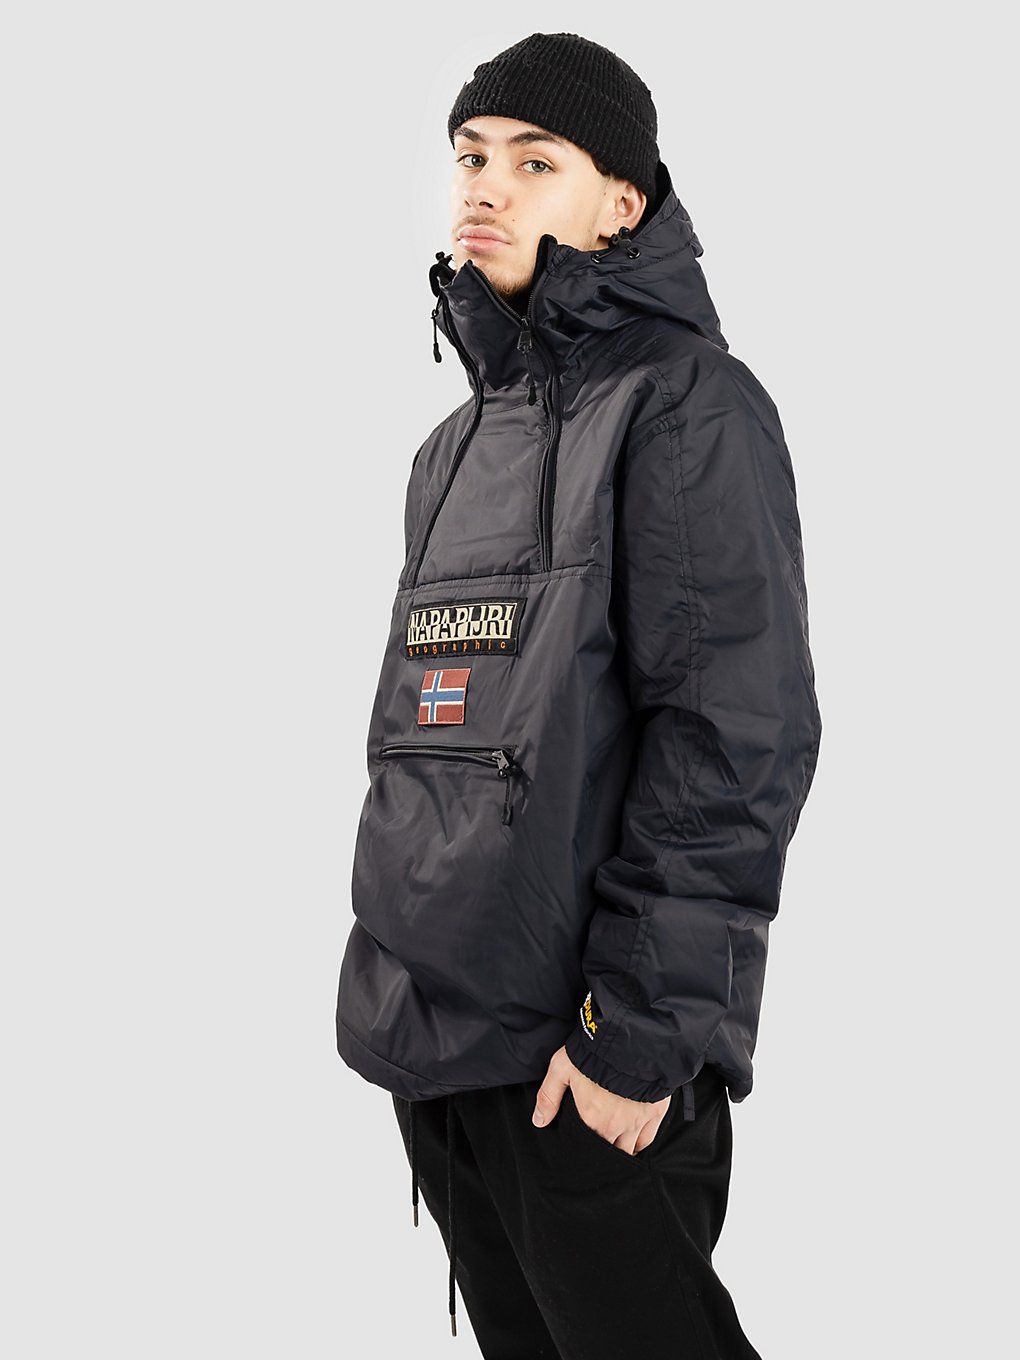 Napapijri Northfarer 2.0 Wint Jacket black kaufen